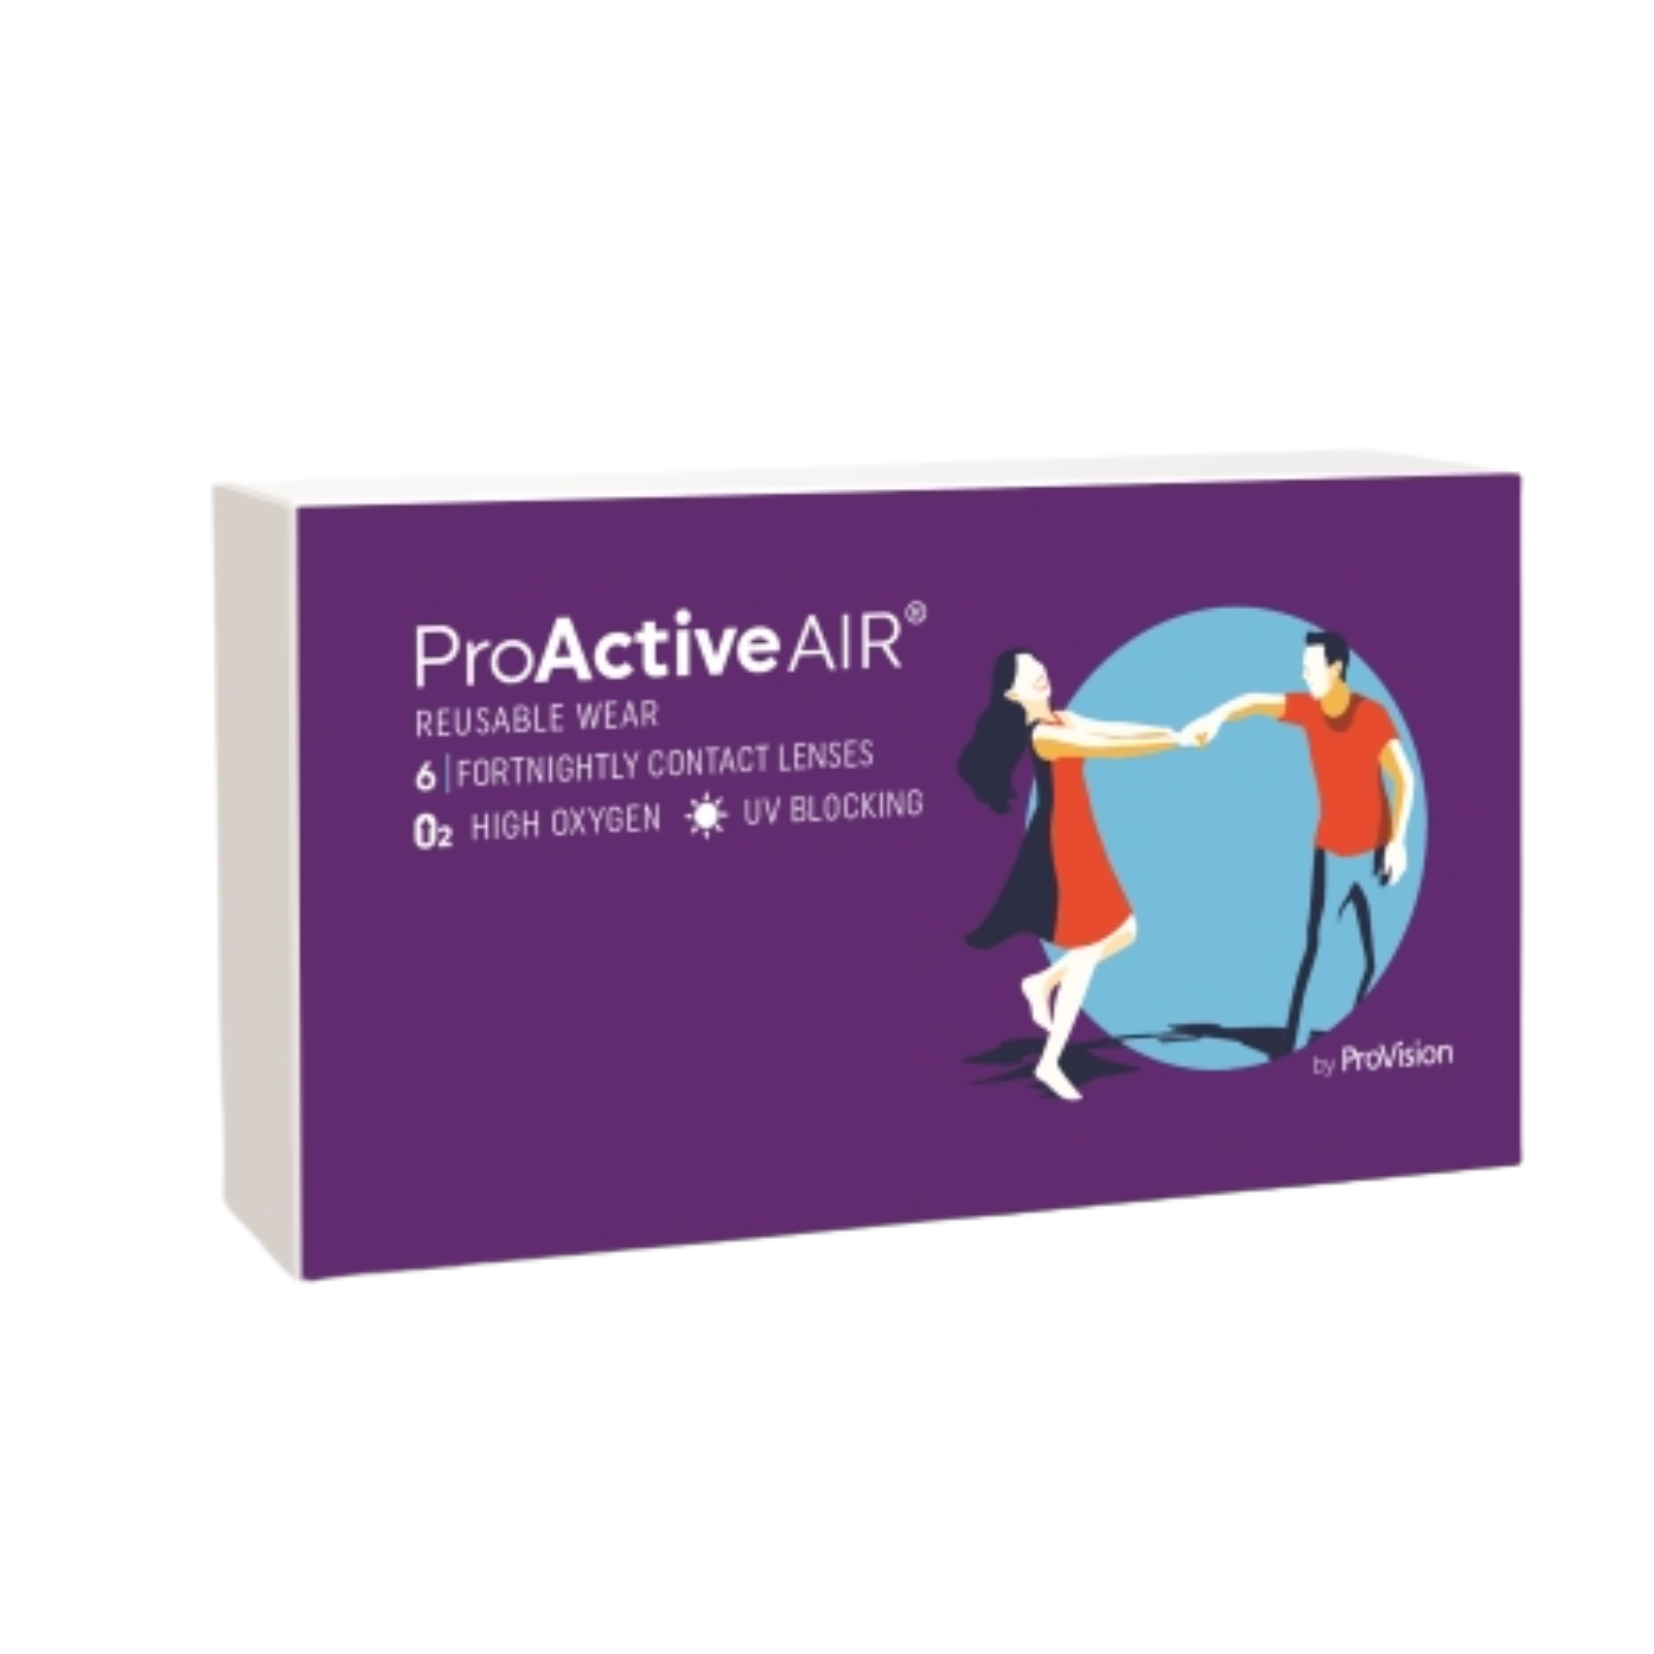 ProActive Air